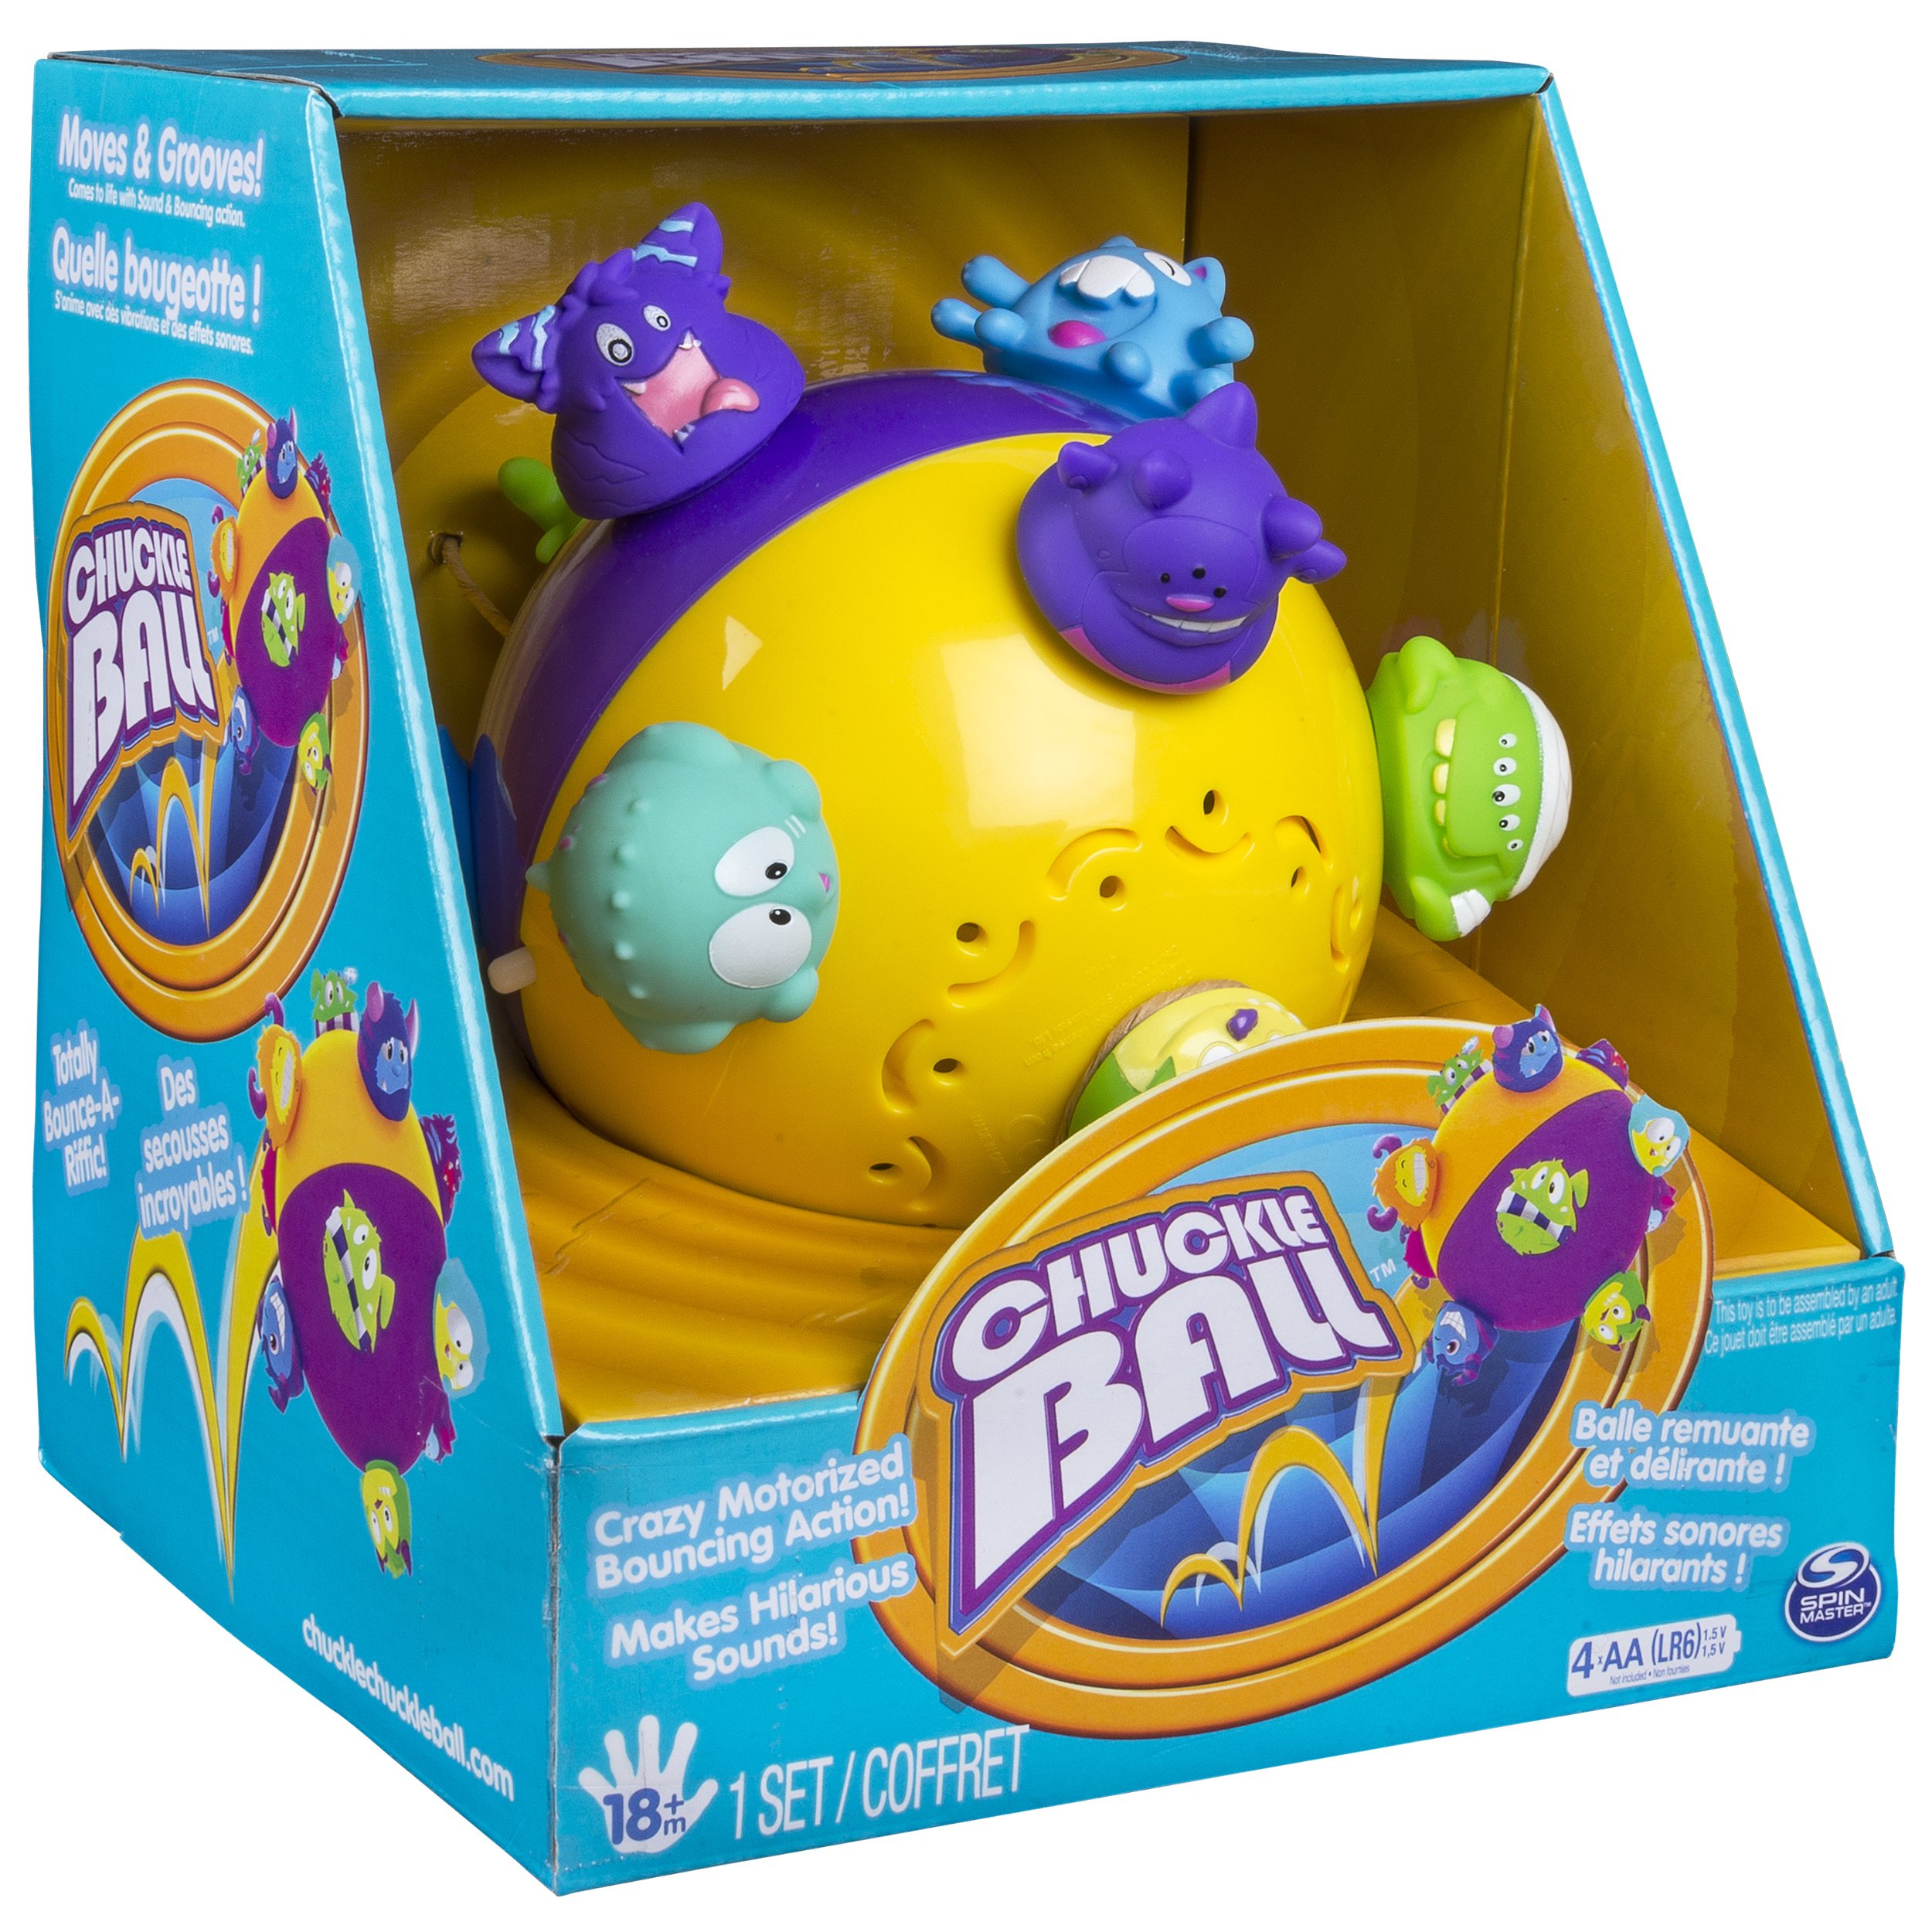 Chuckle Ball, Bouncing Sensory Developmental Ball